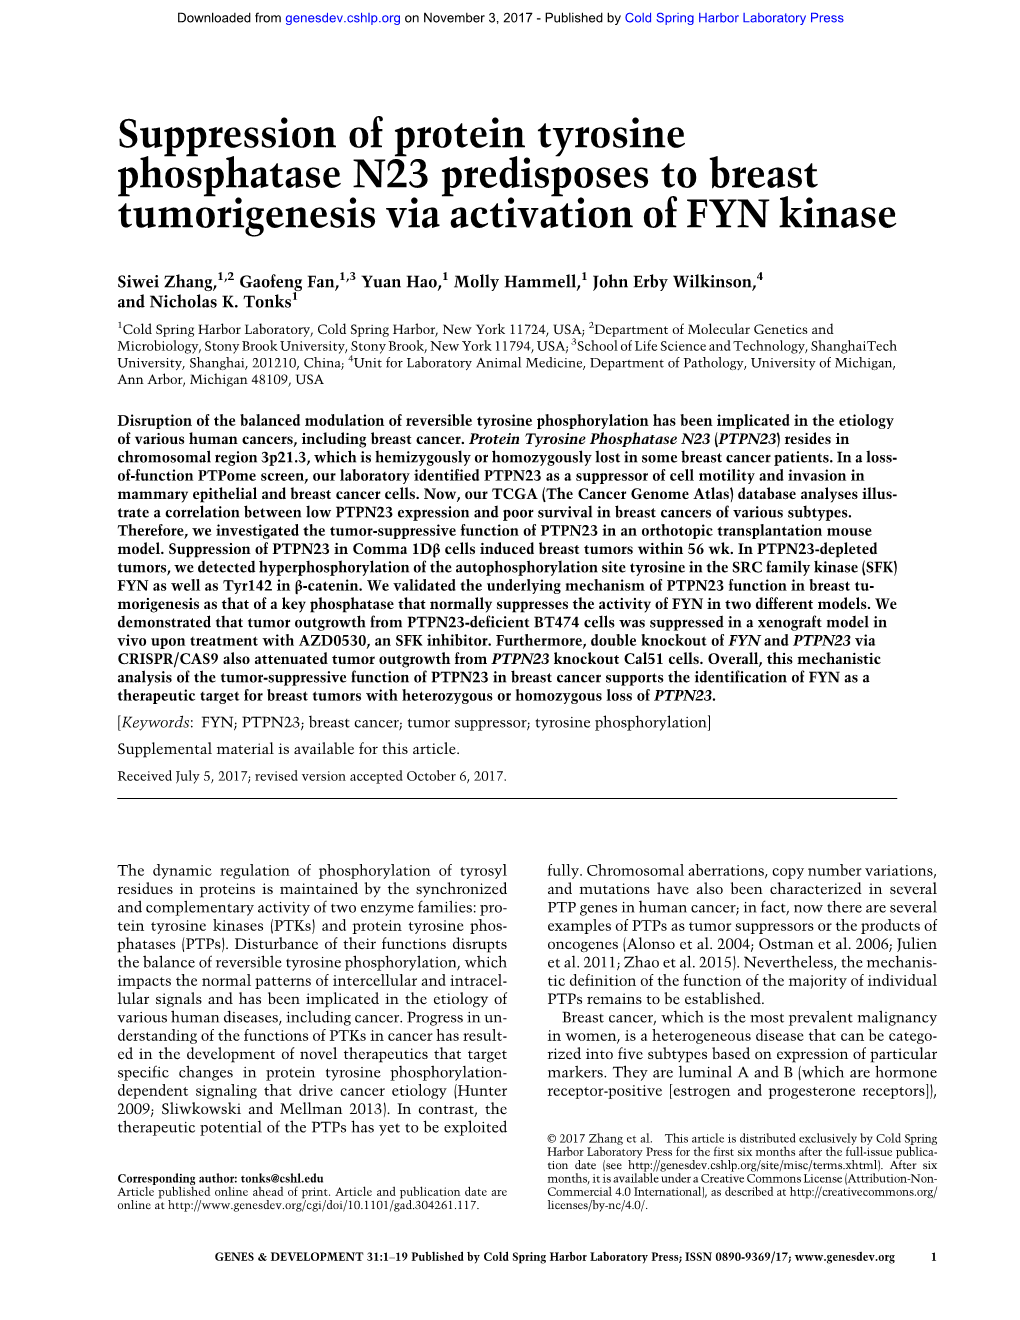 Suppression of Protein Tyrosine Phosphatase N23 Predisposes to Breast Tumorigenesis Via Activation of FYN Kinase